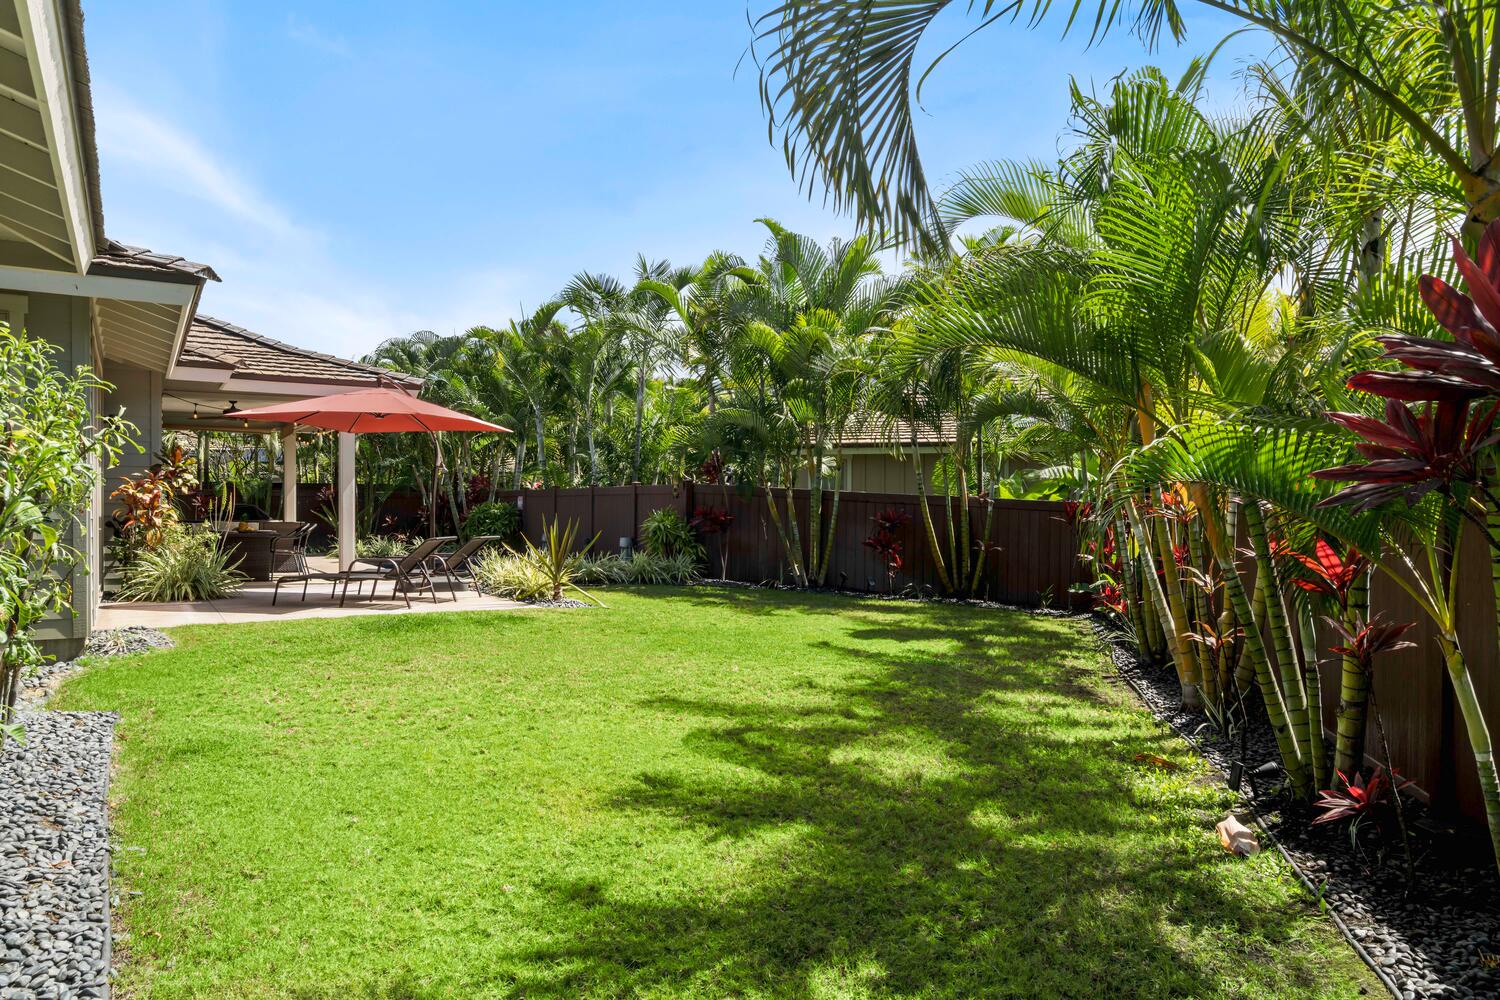 Kailua Kona Vacation Rentals, Holua Kai #32 - The lush green garden perfect for the little ones to run around.